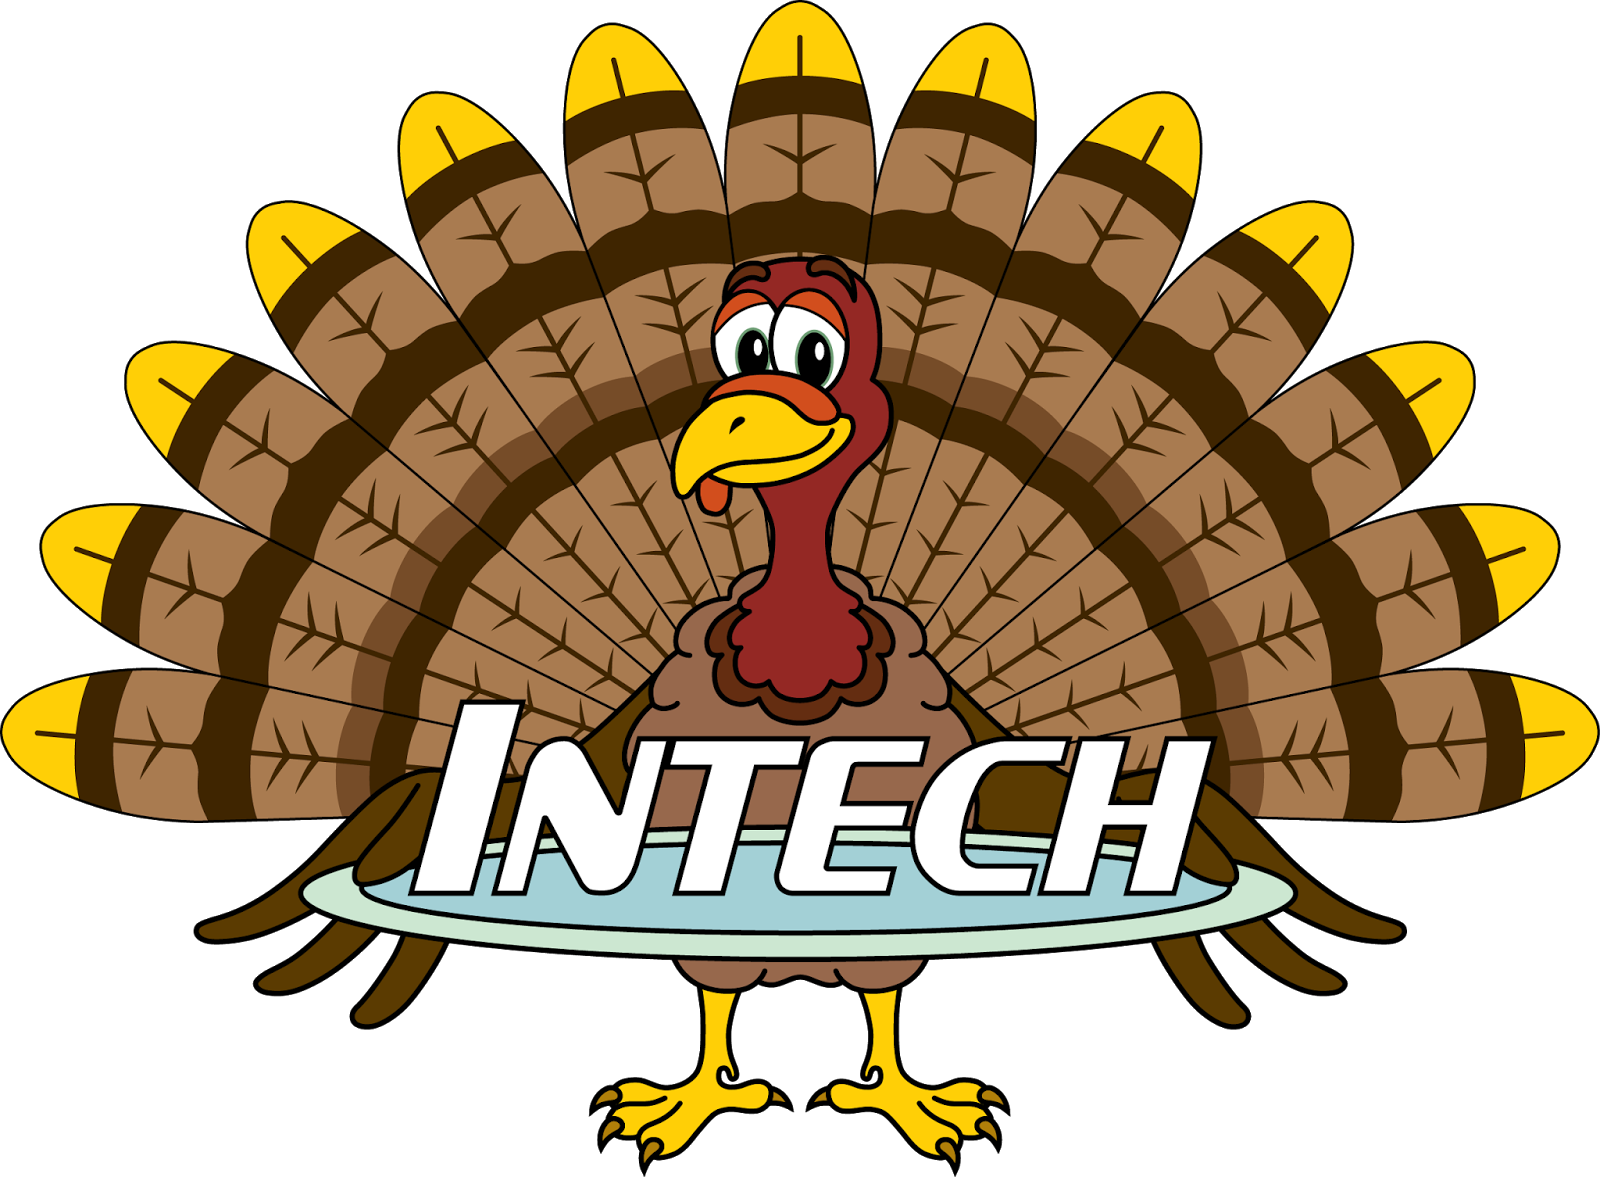 The intech insider happy. November clipart simple turkey